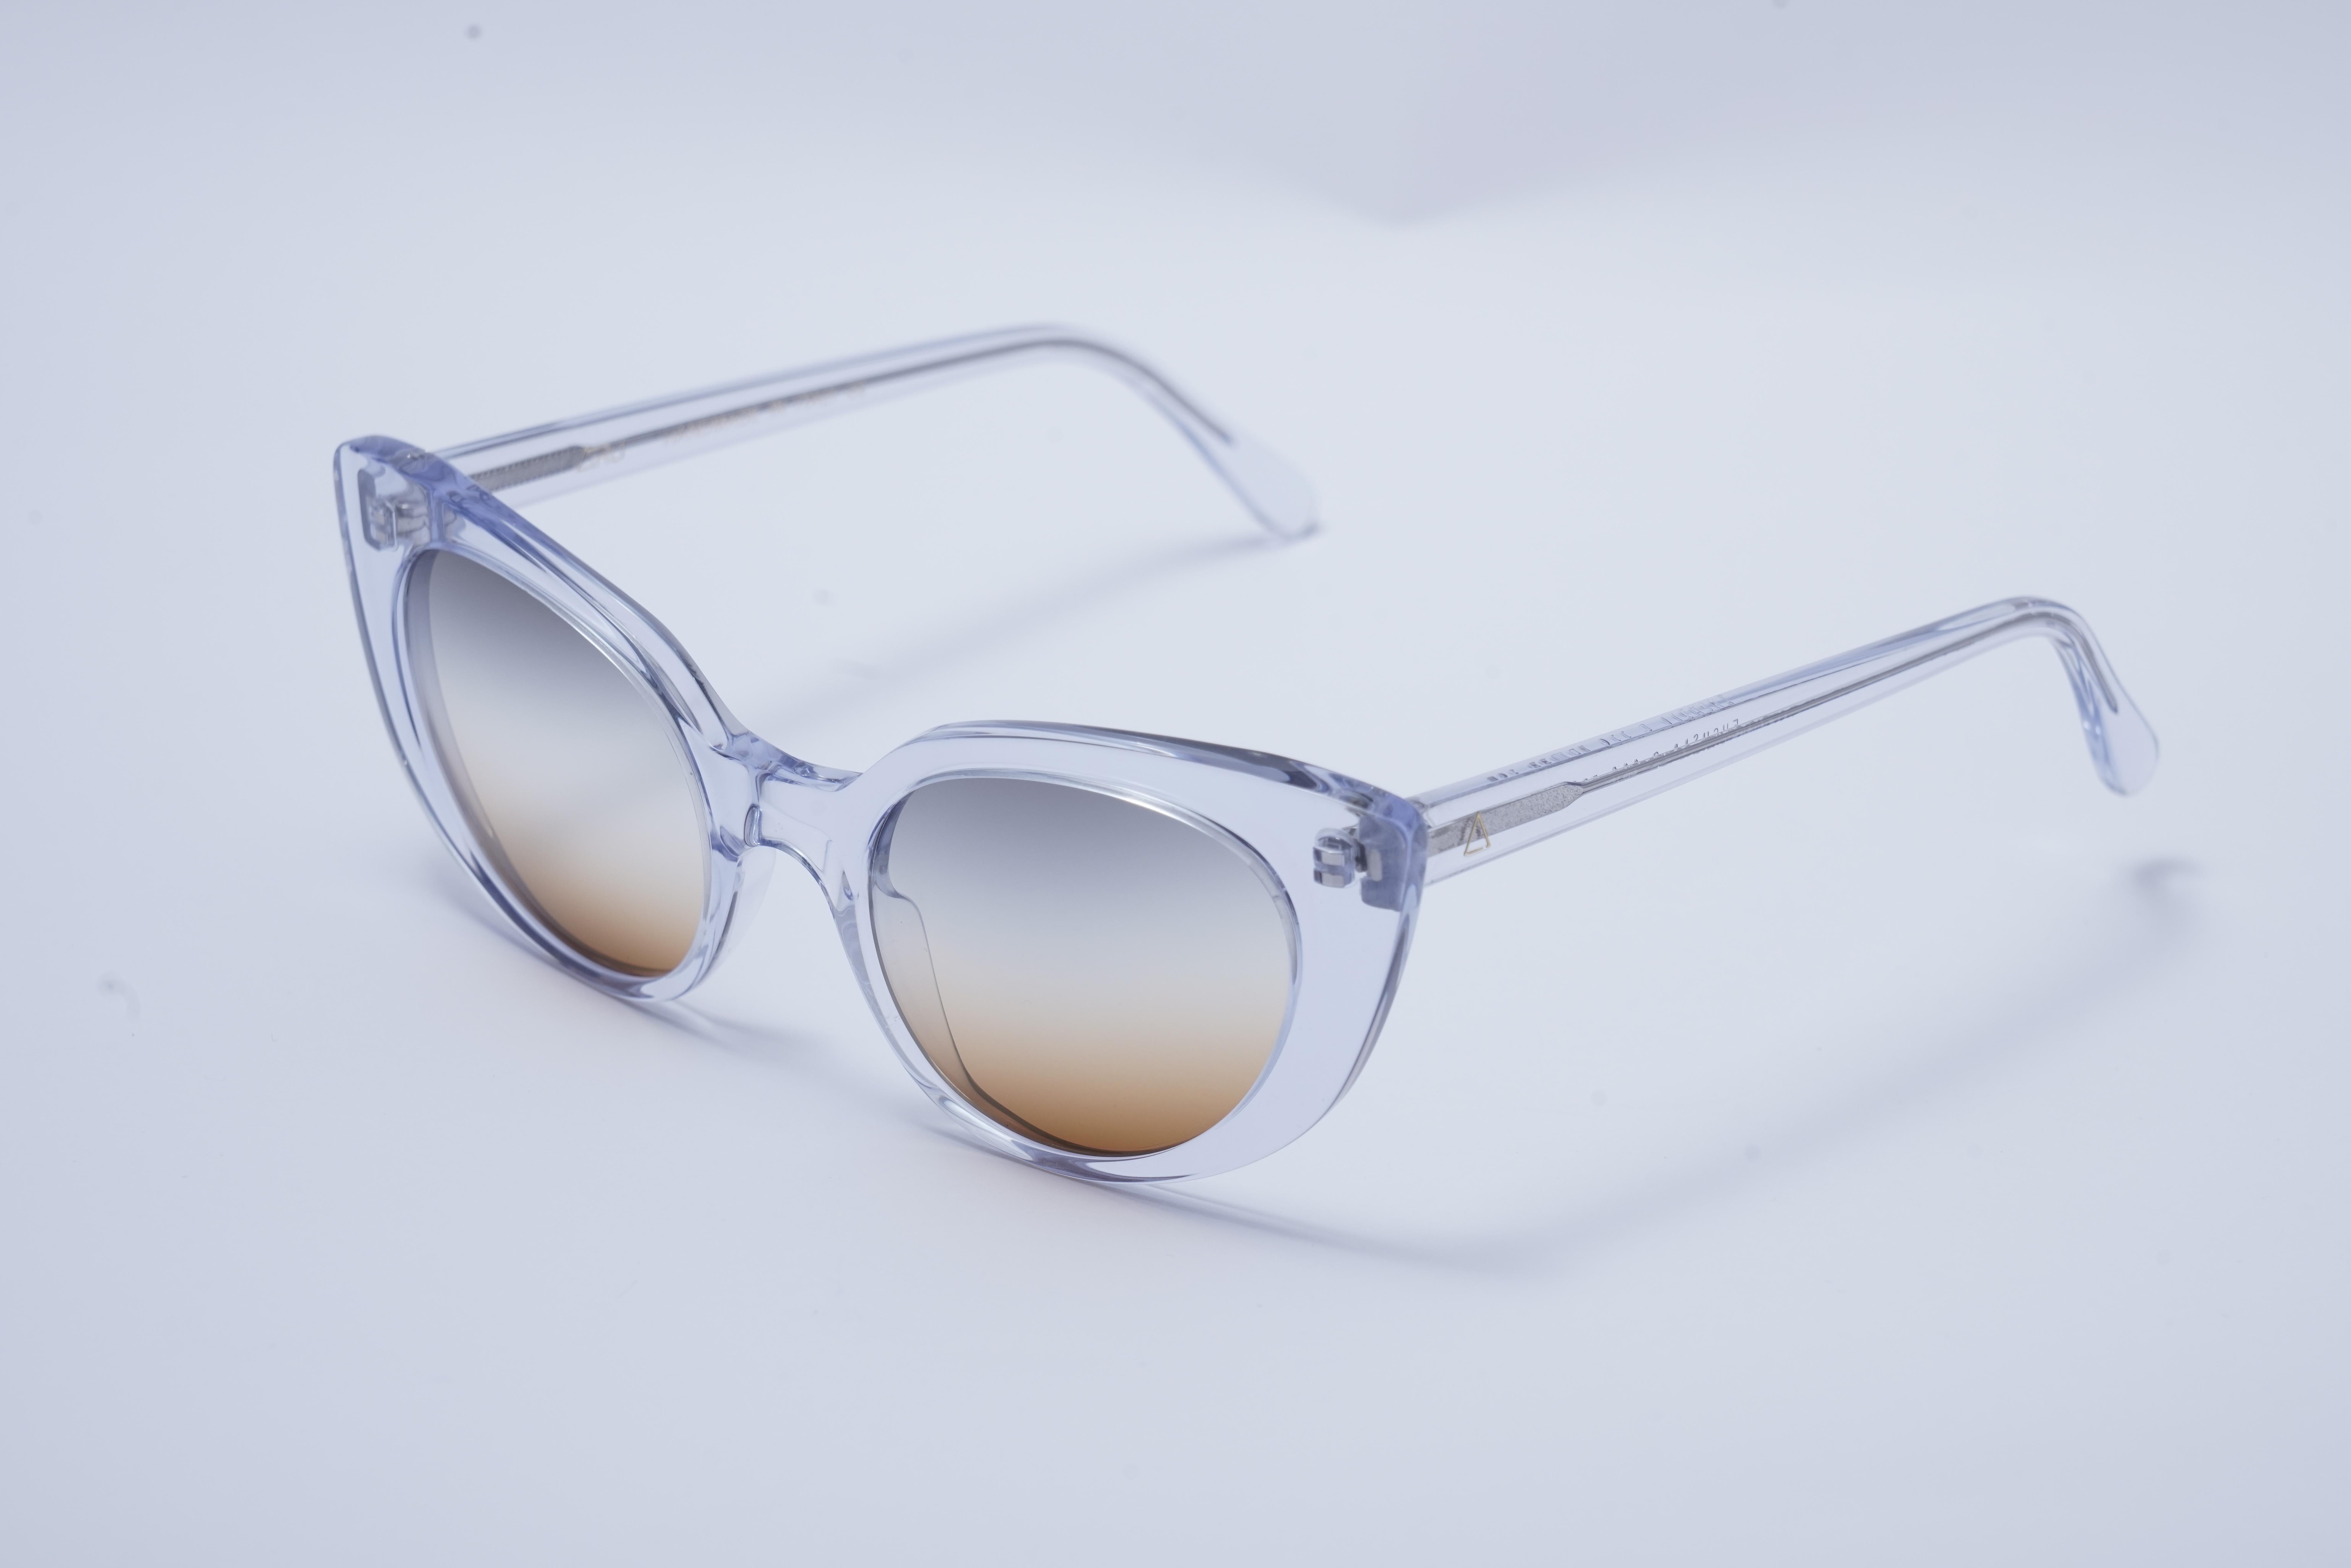 Aru Eyewear Sunglasses
totally made in italy